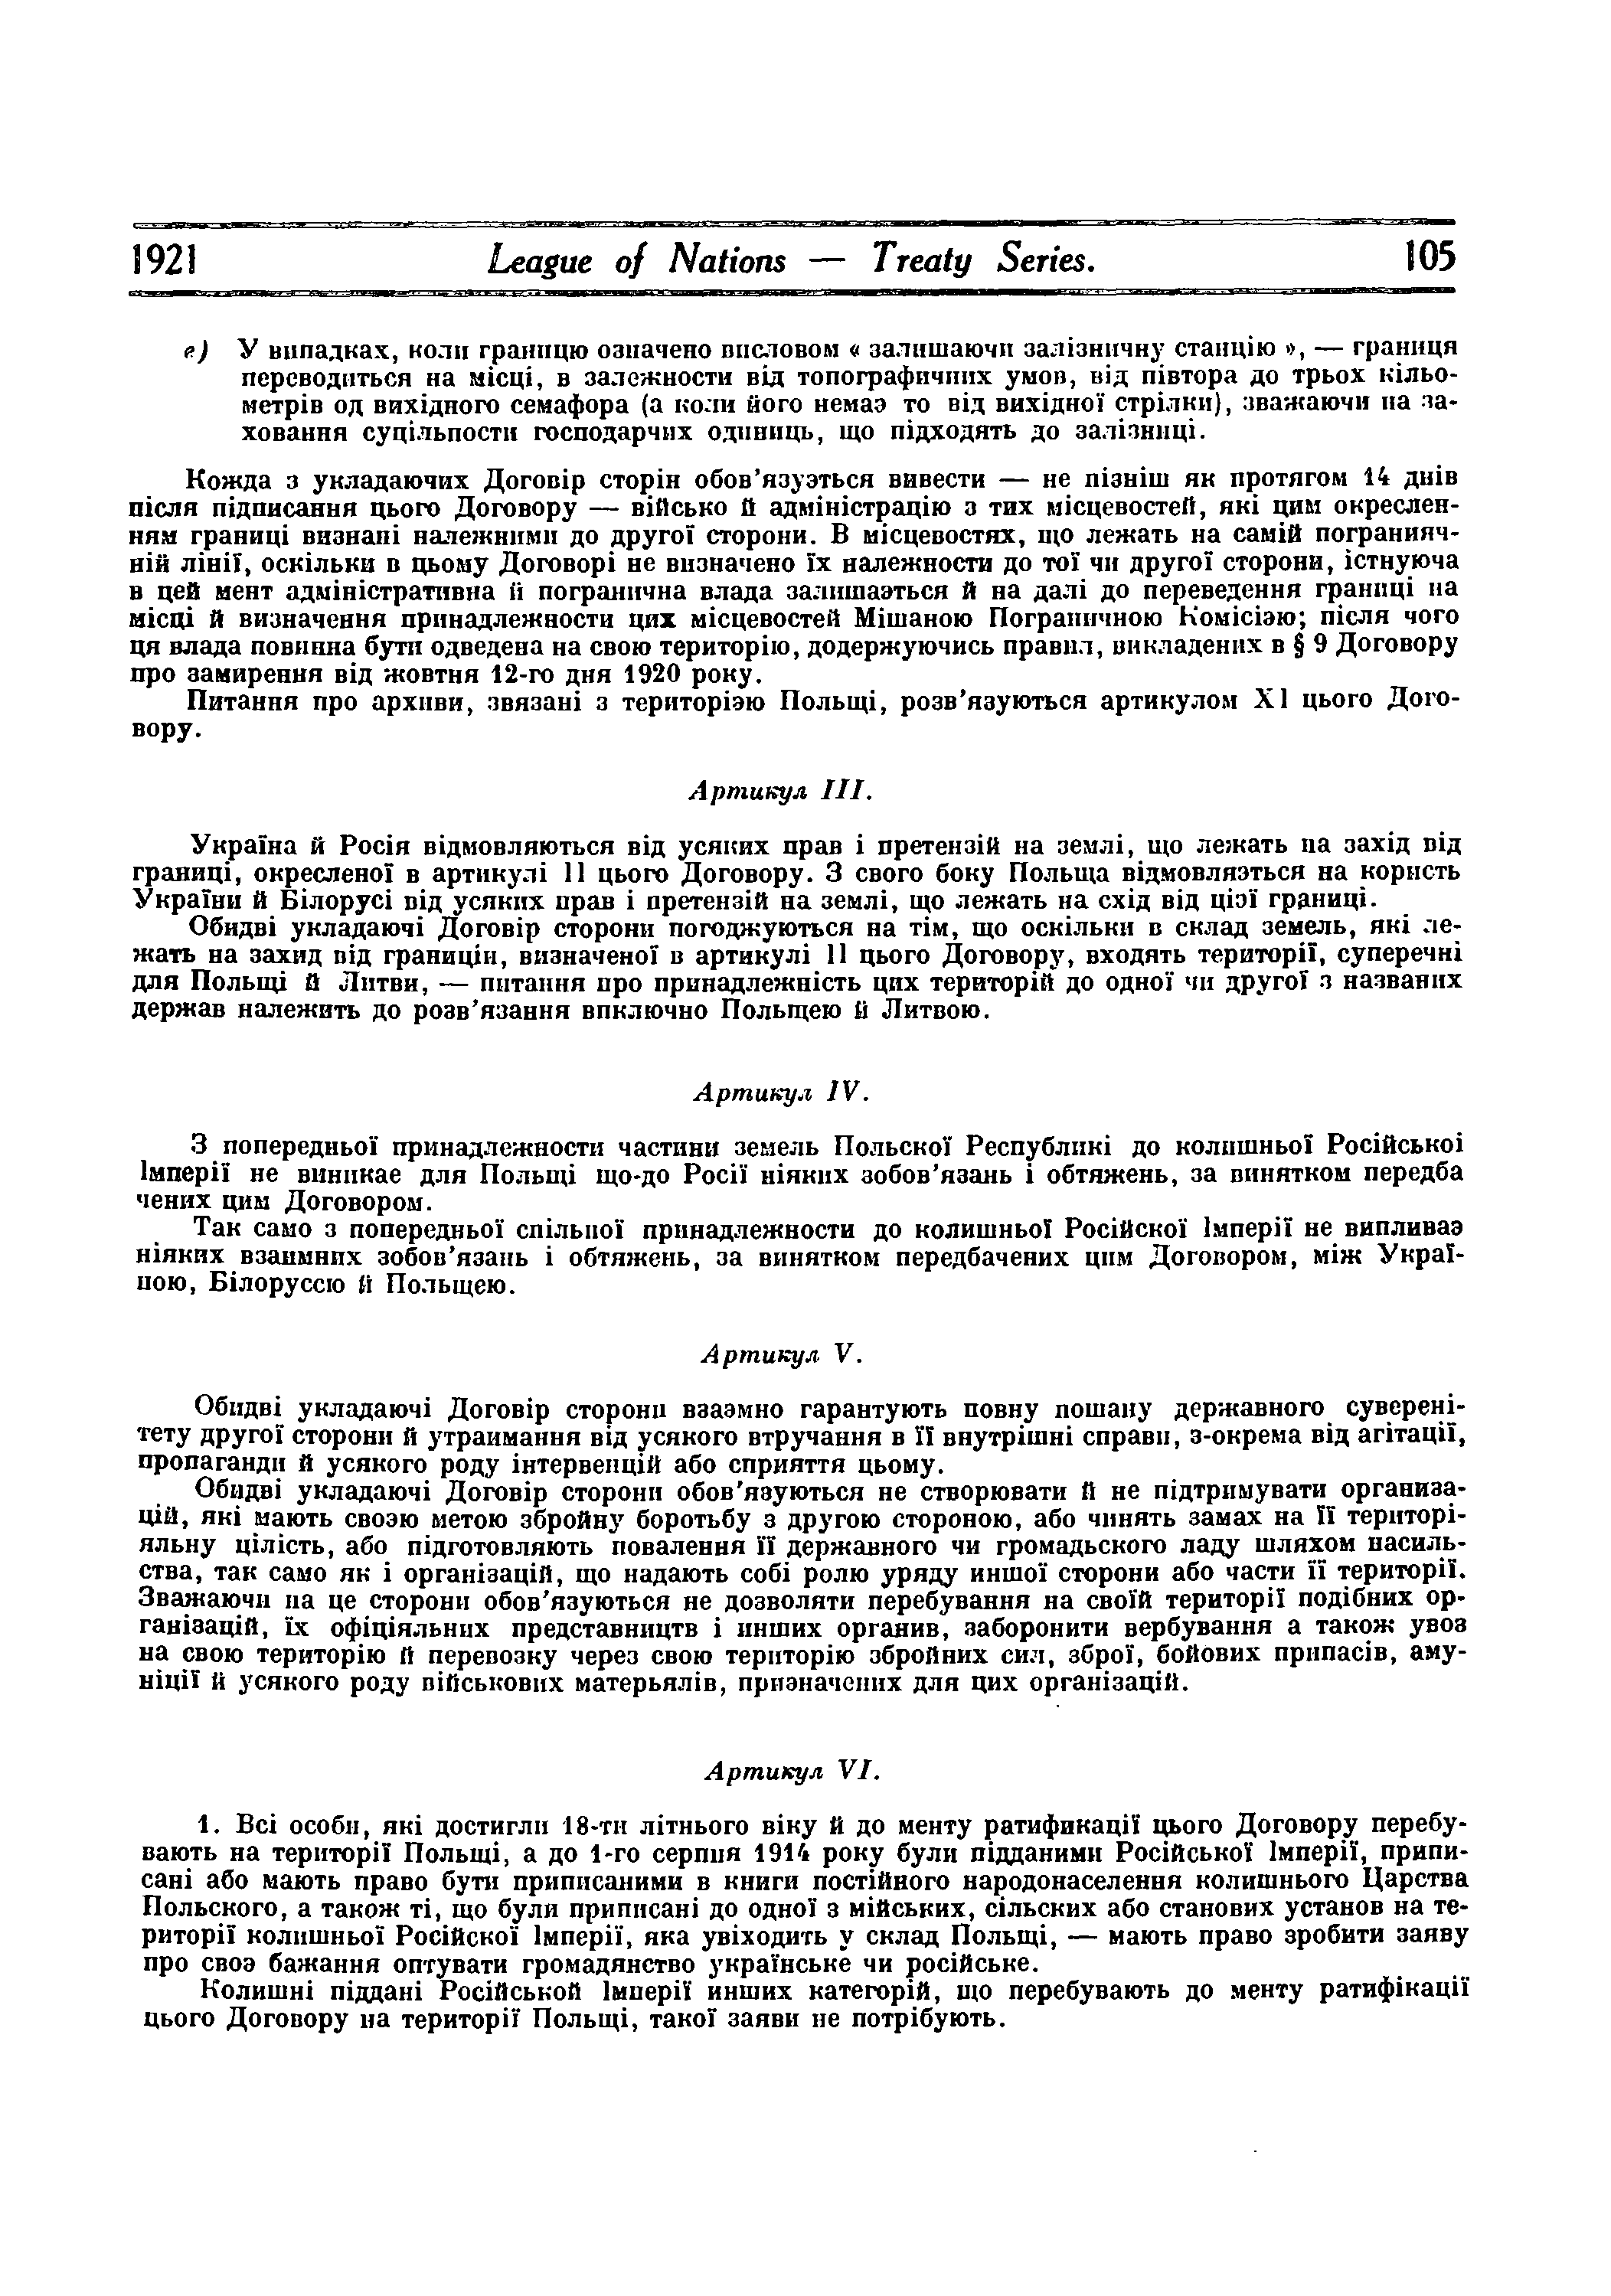 1921 League of Nations - Treaty Series. 105 e) Y uiunagtax, KOzIin rpaimnlio o1iatieho BnIC-IOBOM (0 3a.miiaotil 3a:i.